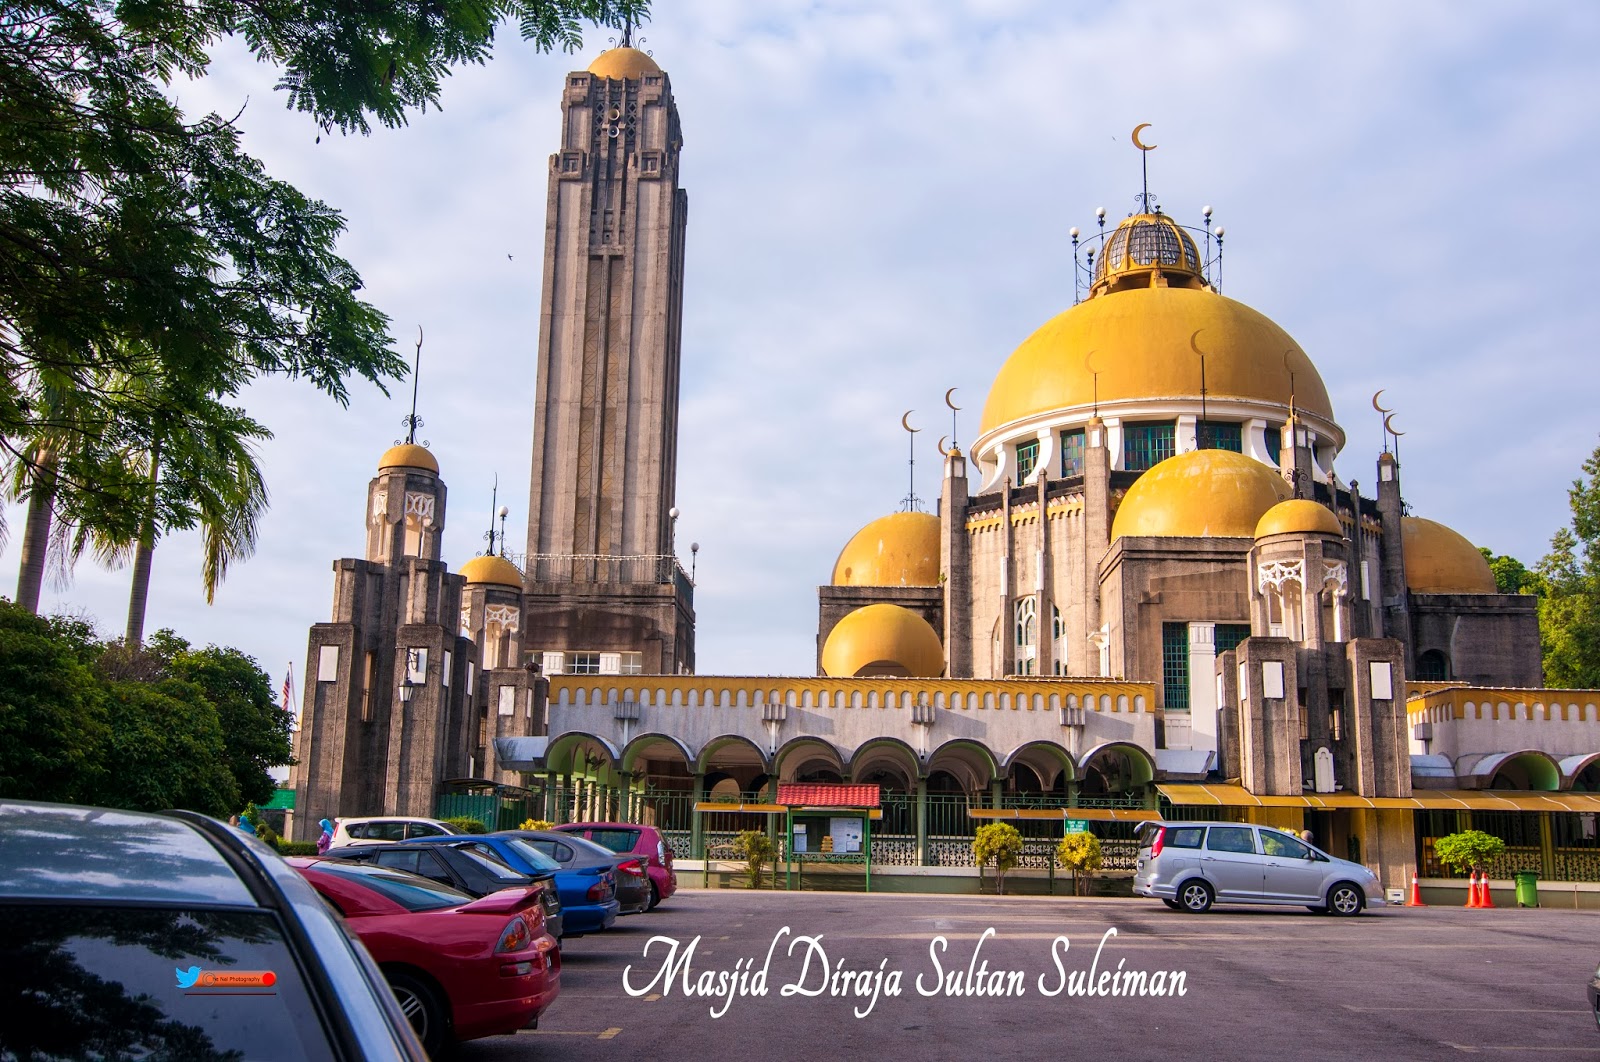 waknal.blogspot.com : Masjid Diraja Sultan Suleiman